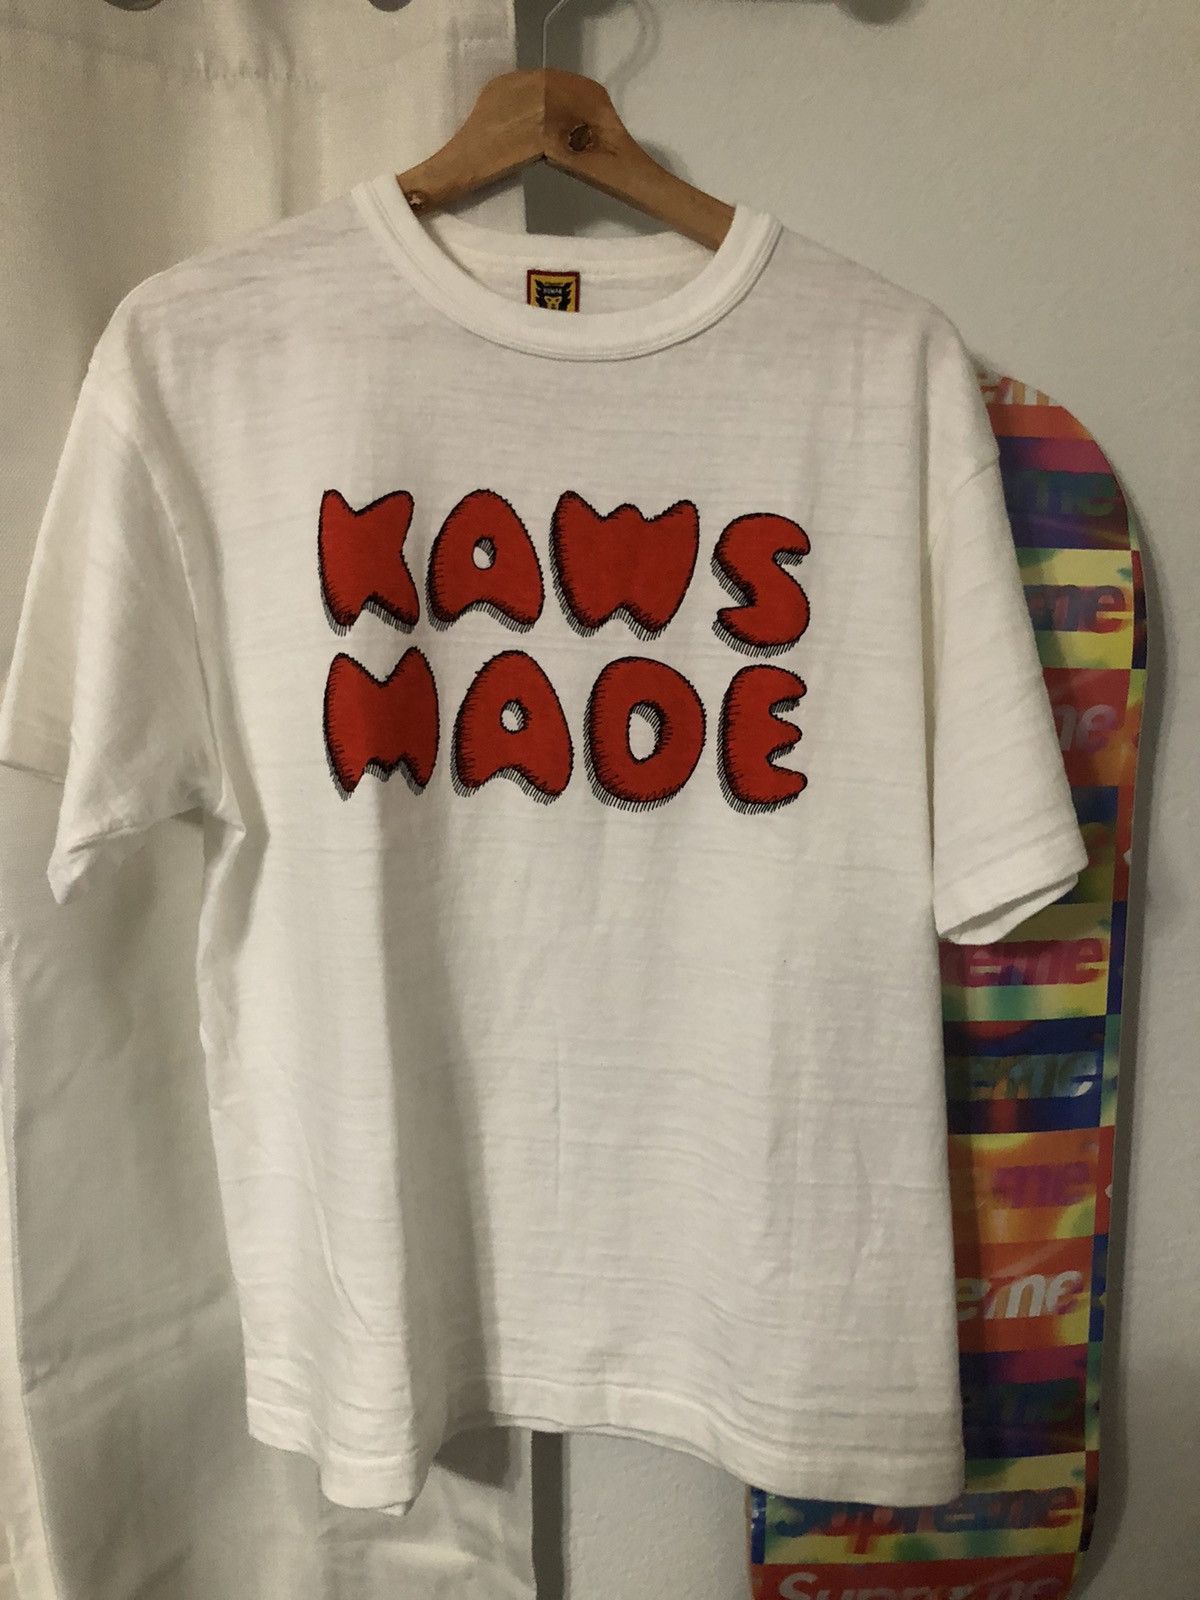 Human Made x KAWS #3 T-shirt WhiteHuman Made x KAWS #3 T-shirt White - OFour